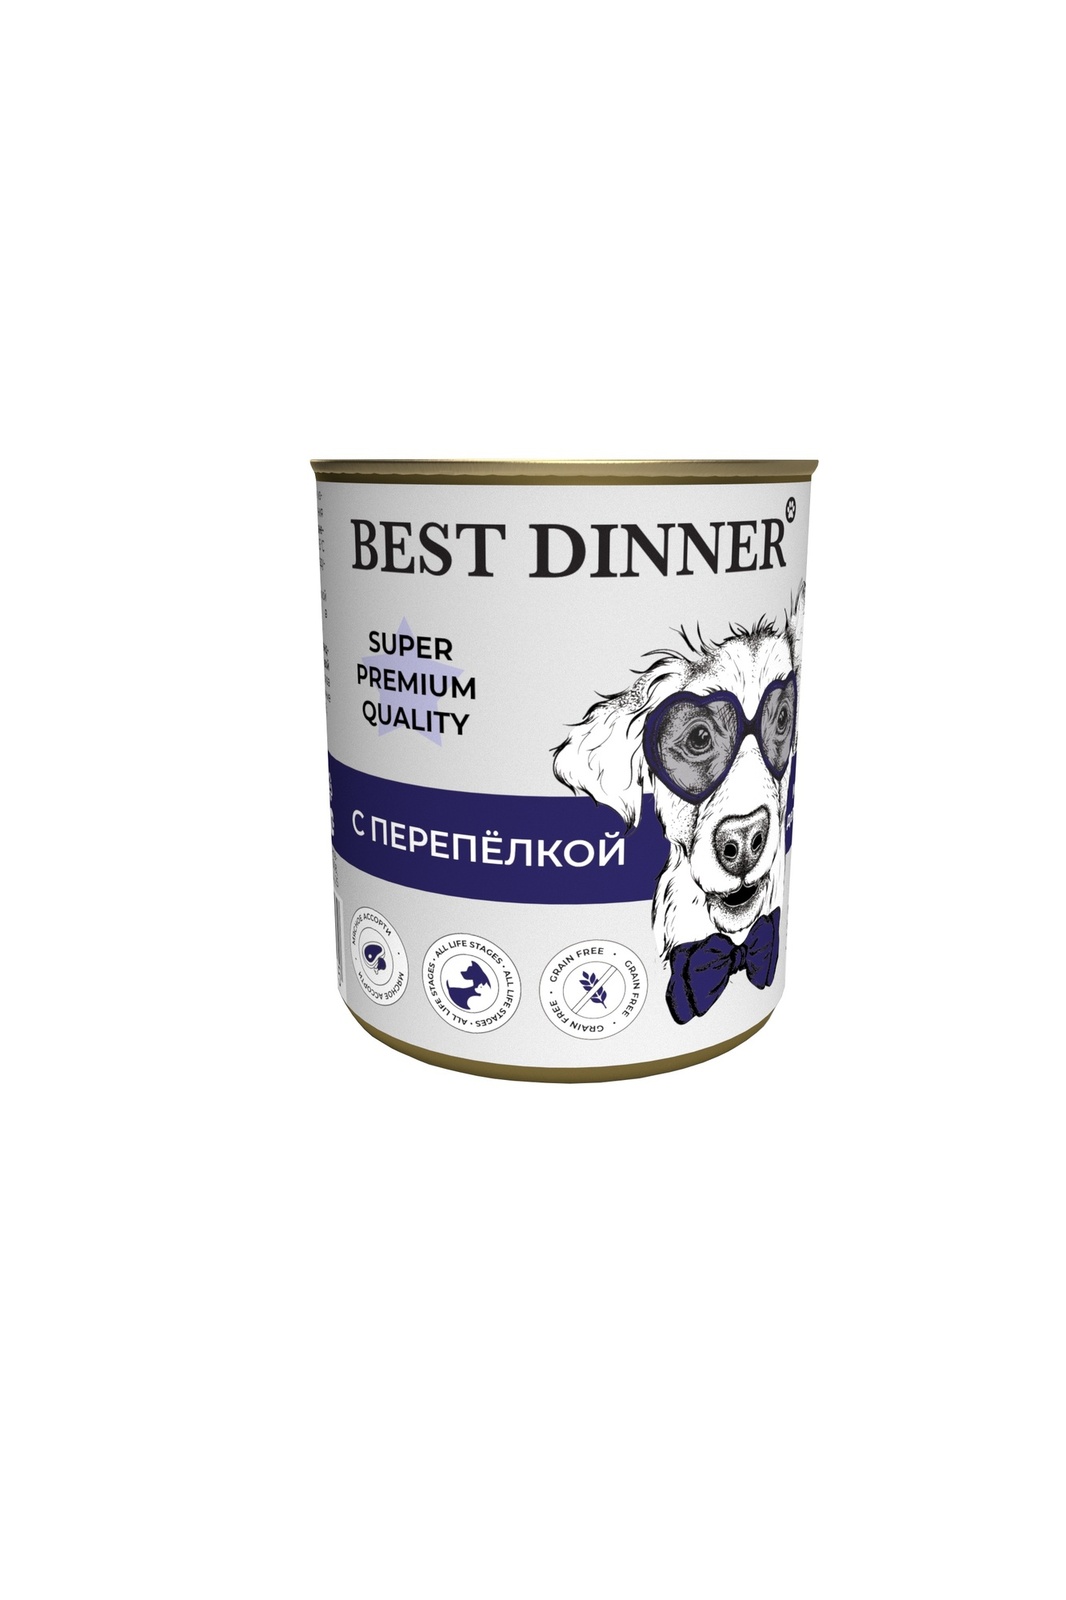 Best Dinner Best Dinner консервы для собак Super Premium С перепелкой (340 г) best dinner best dinner консервы для щенков super premium с телятиной 340 г